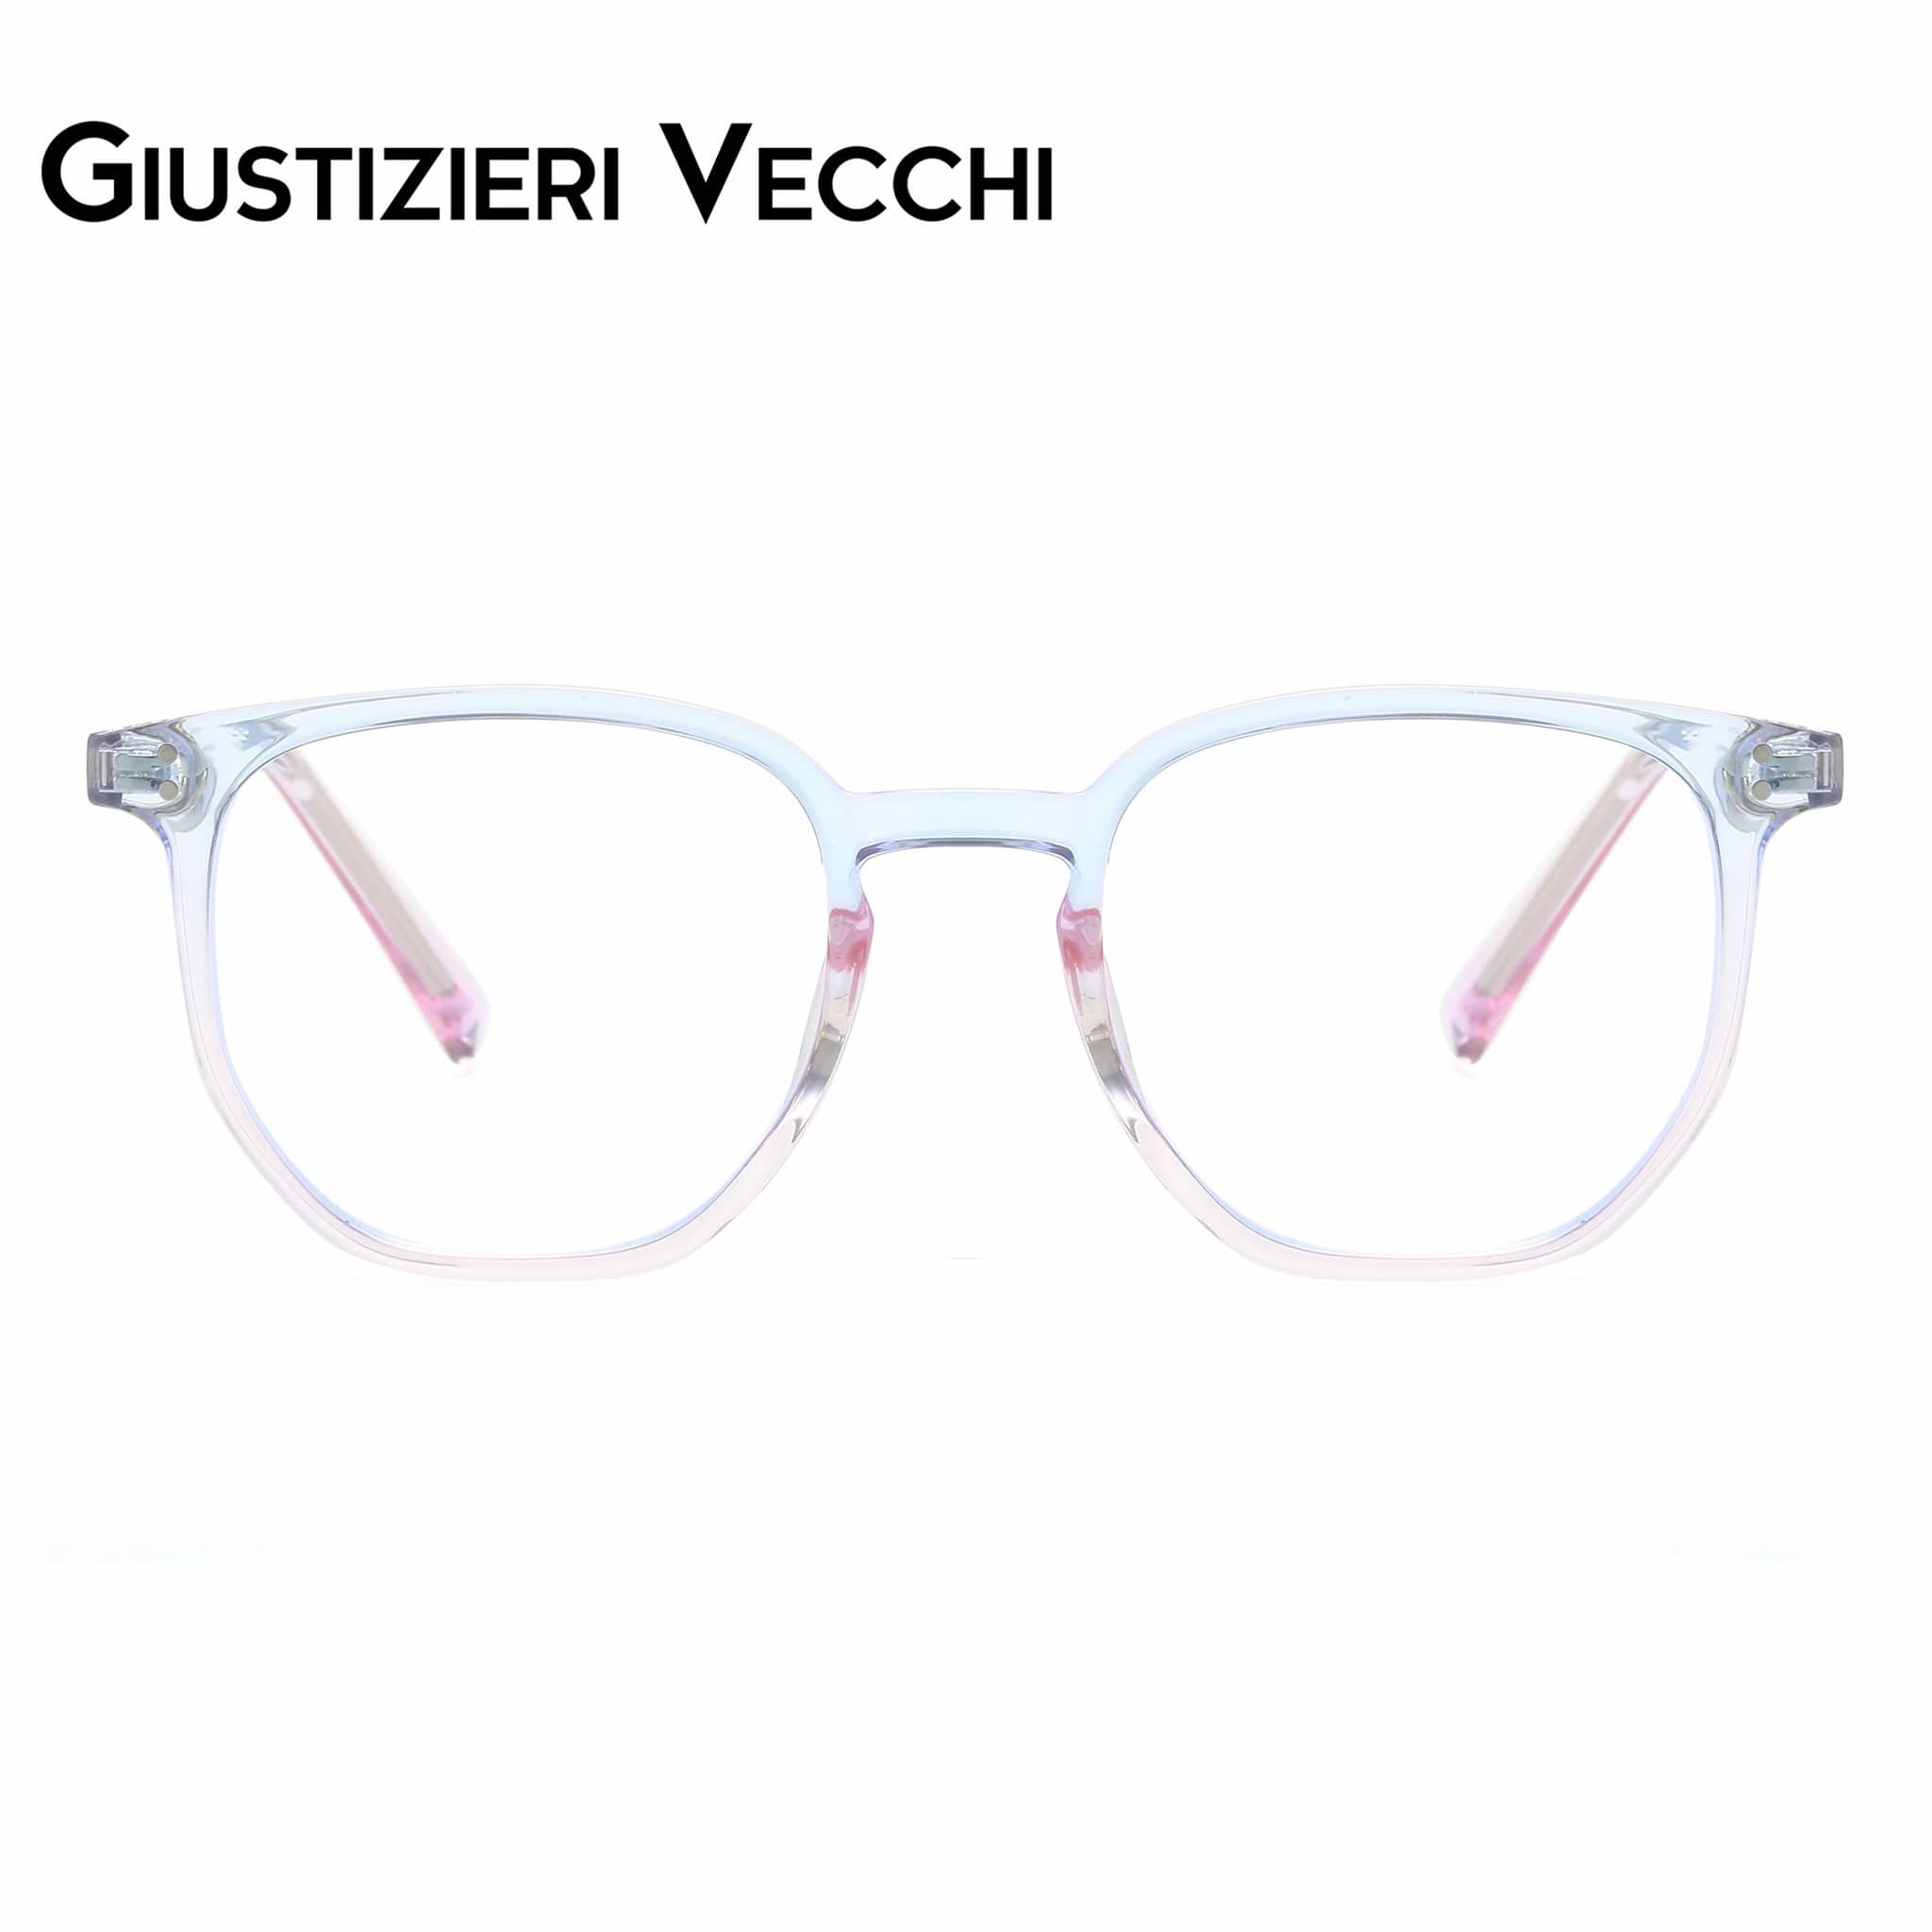 GIUSTIZIERI VECCHI Eyeglasses Small / Iceberg Crystal Venezia Vista Duo